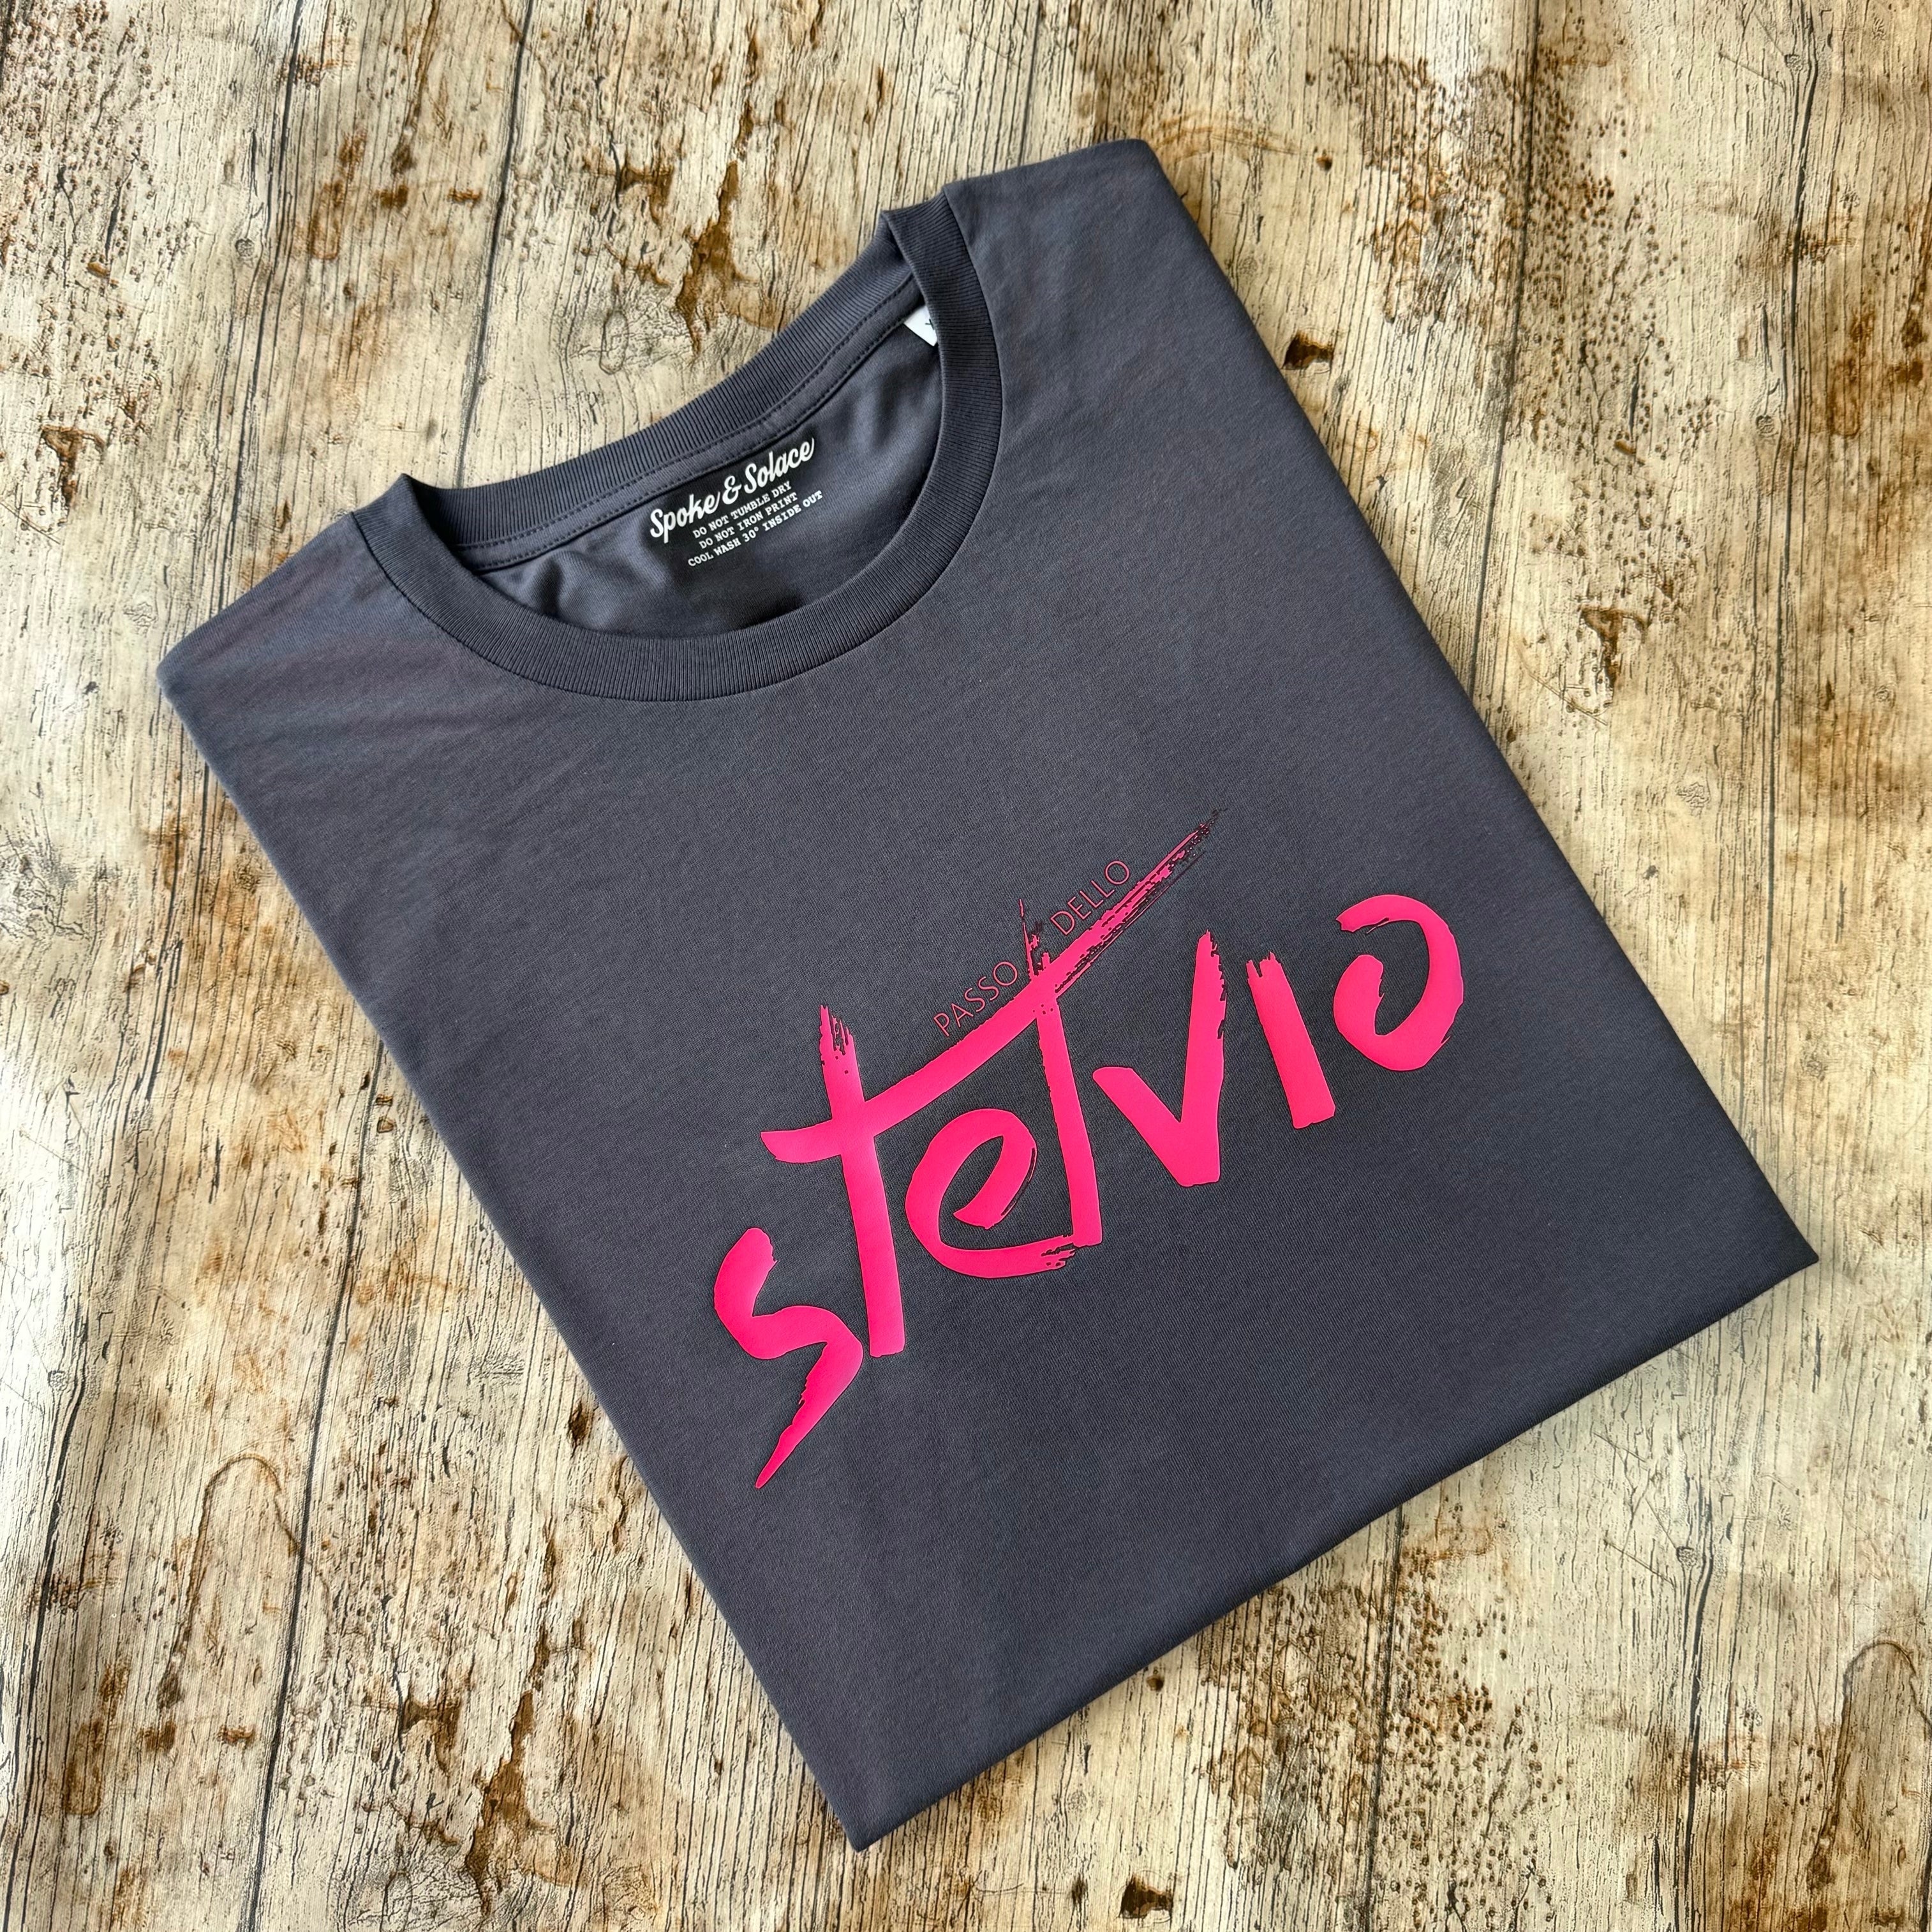 Stelvio T-shirt Bundle